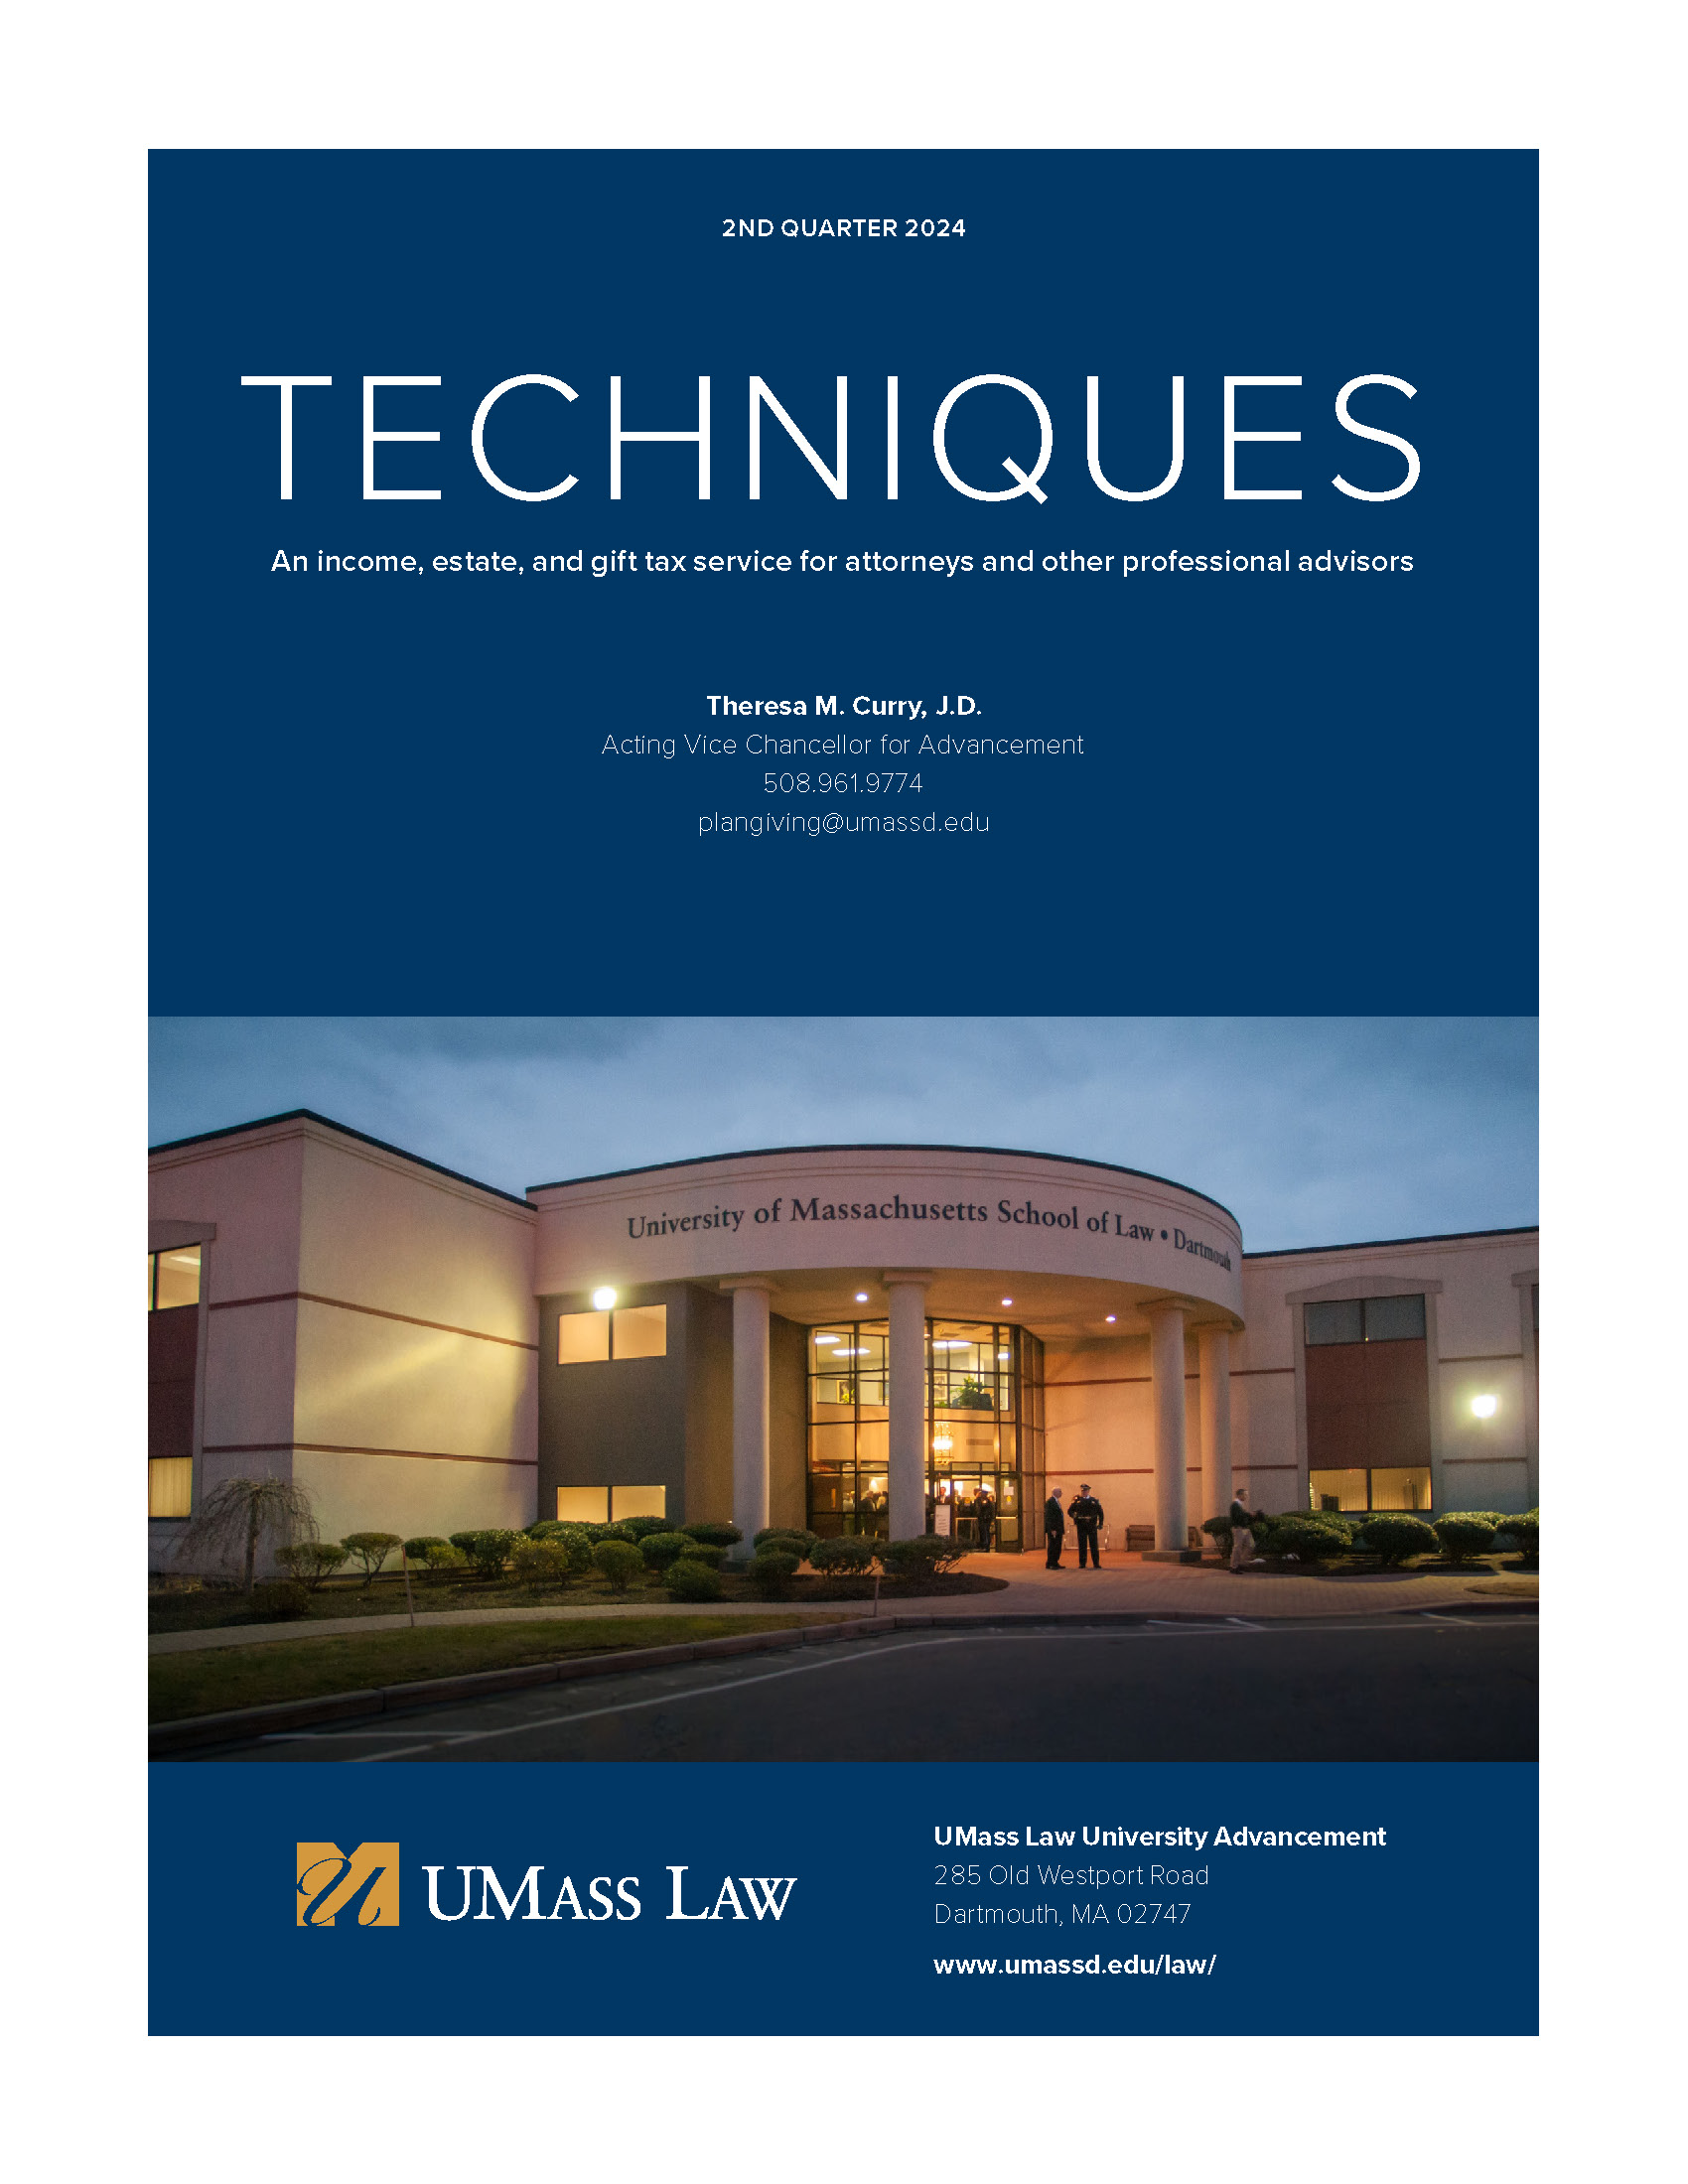 Thumbnail: UMass Law 2nd Quarter 2024 TECHNIQUES cover.